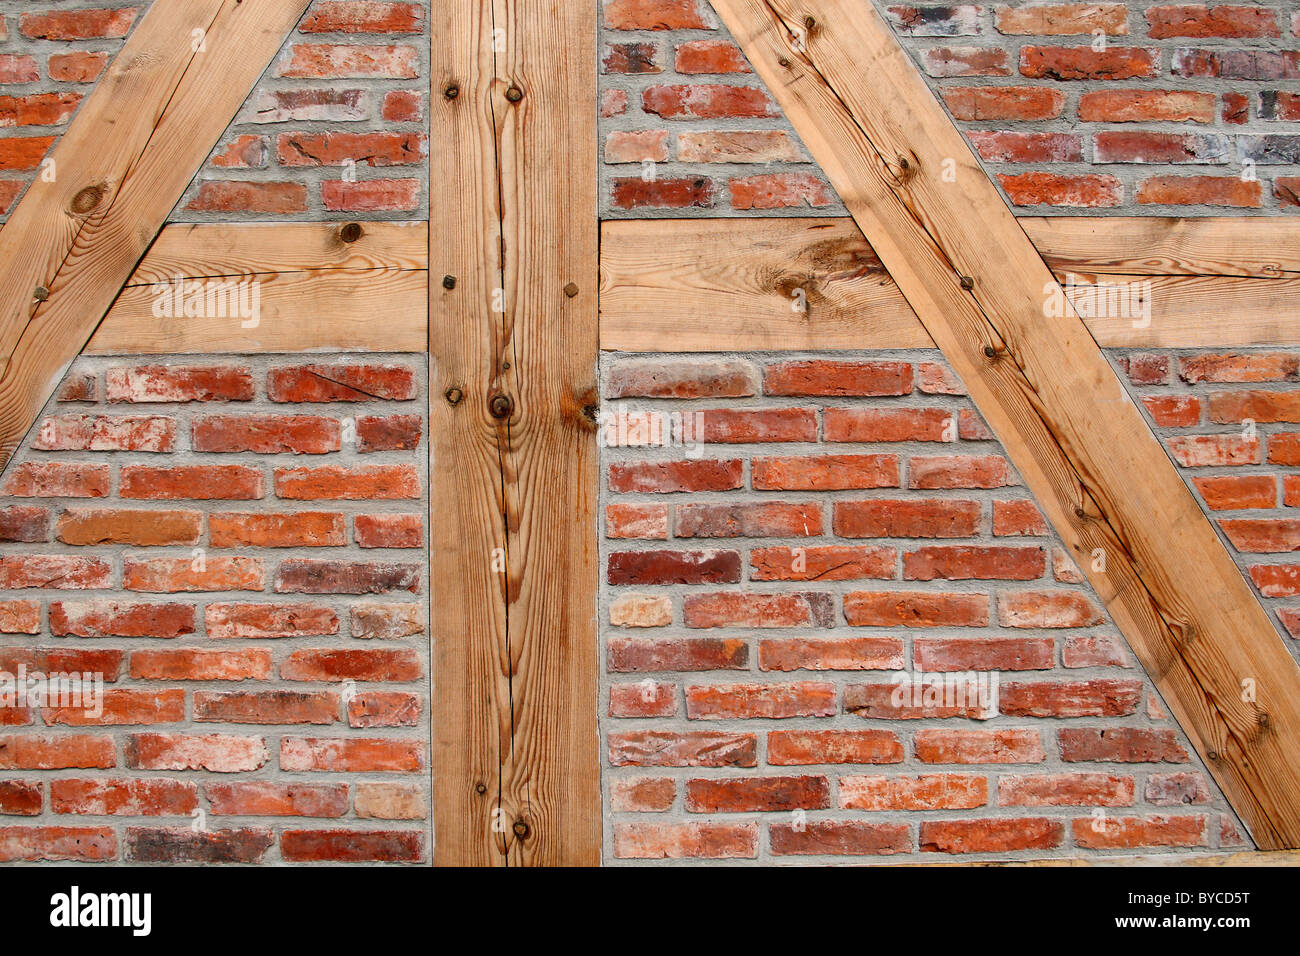 Timber framing - half-timbered construction of the wall. Stock Photo